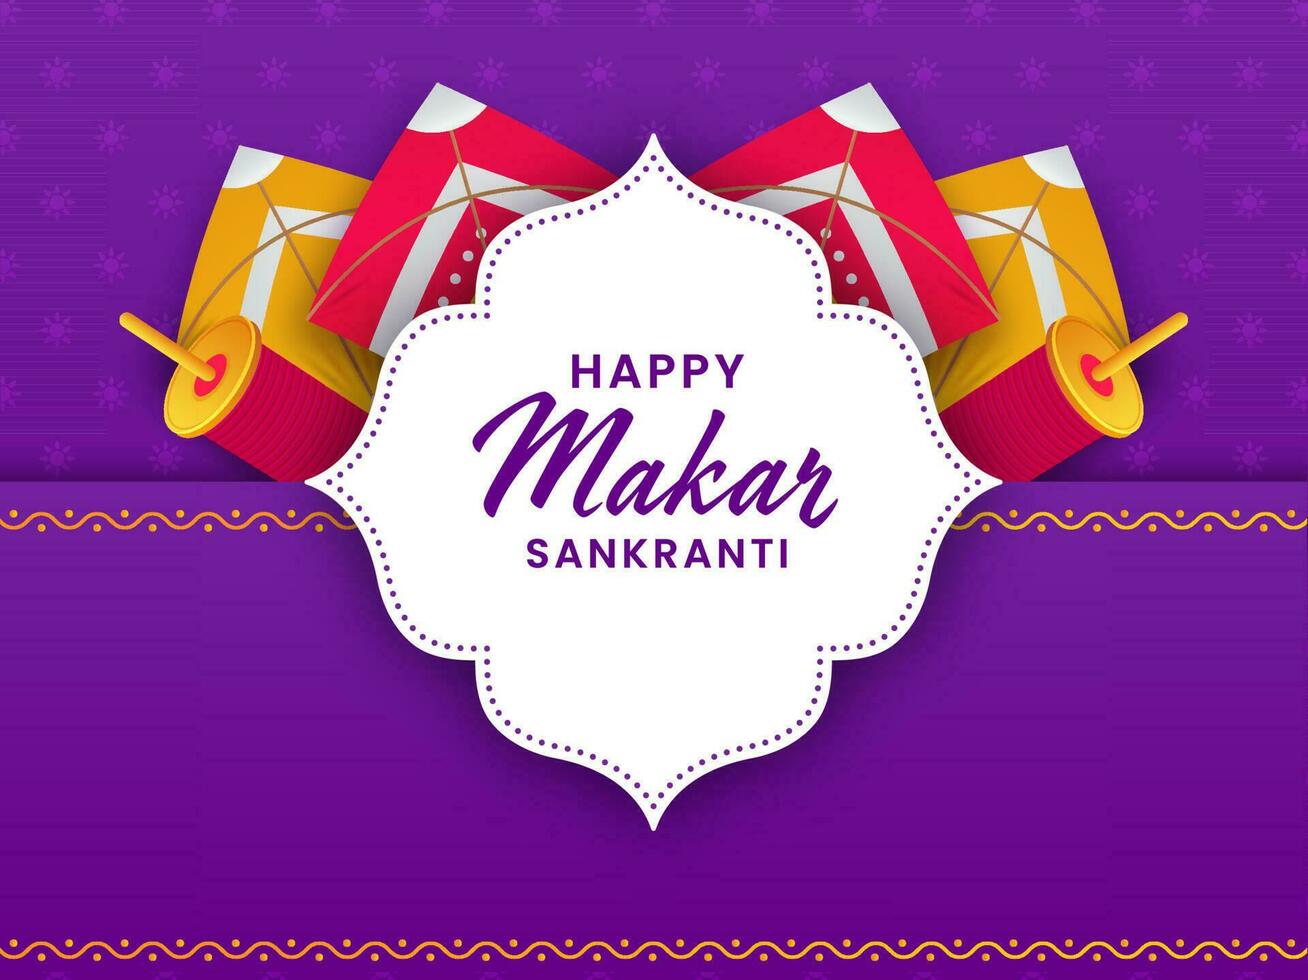 Happy Makar Sankranti Greeting Card With Kites, String Spools On Purple Background. vector